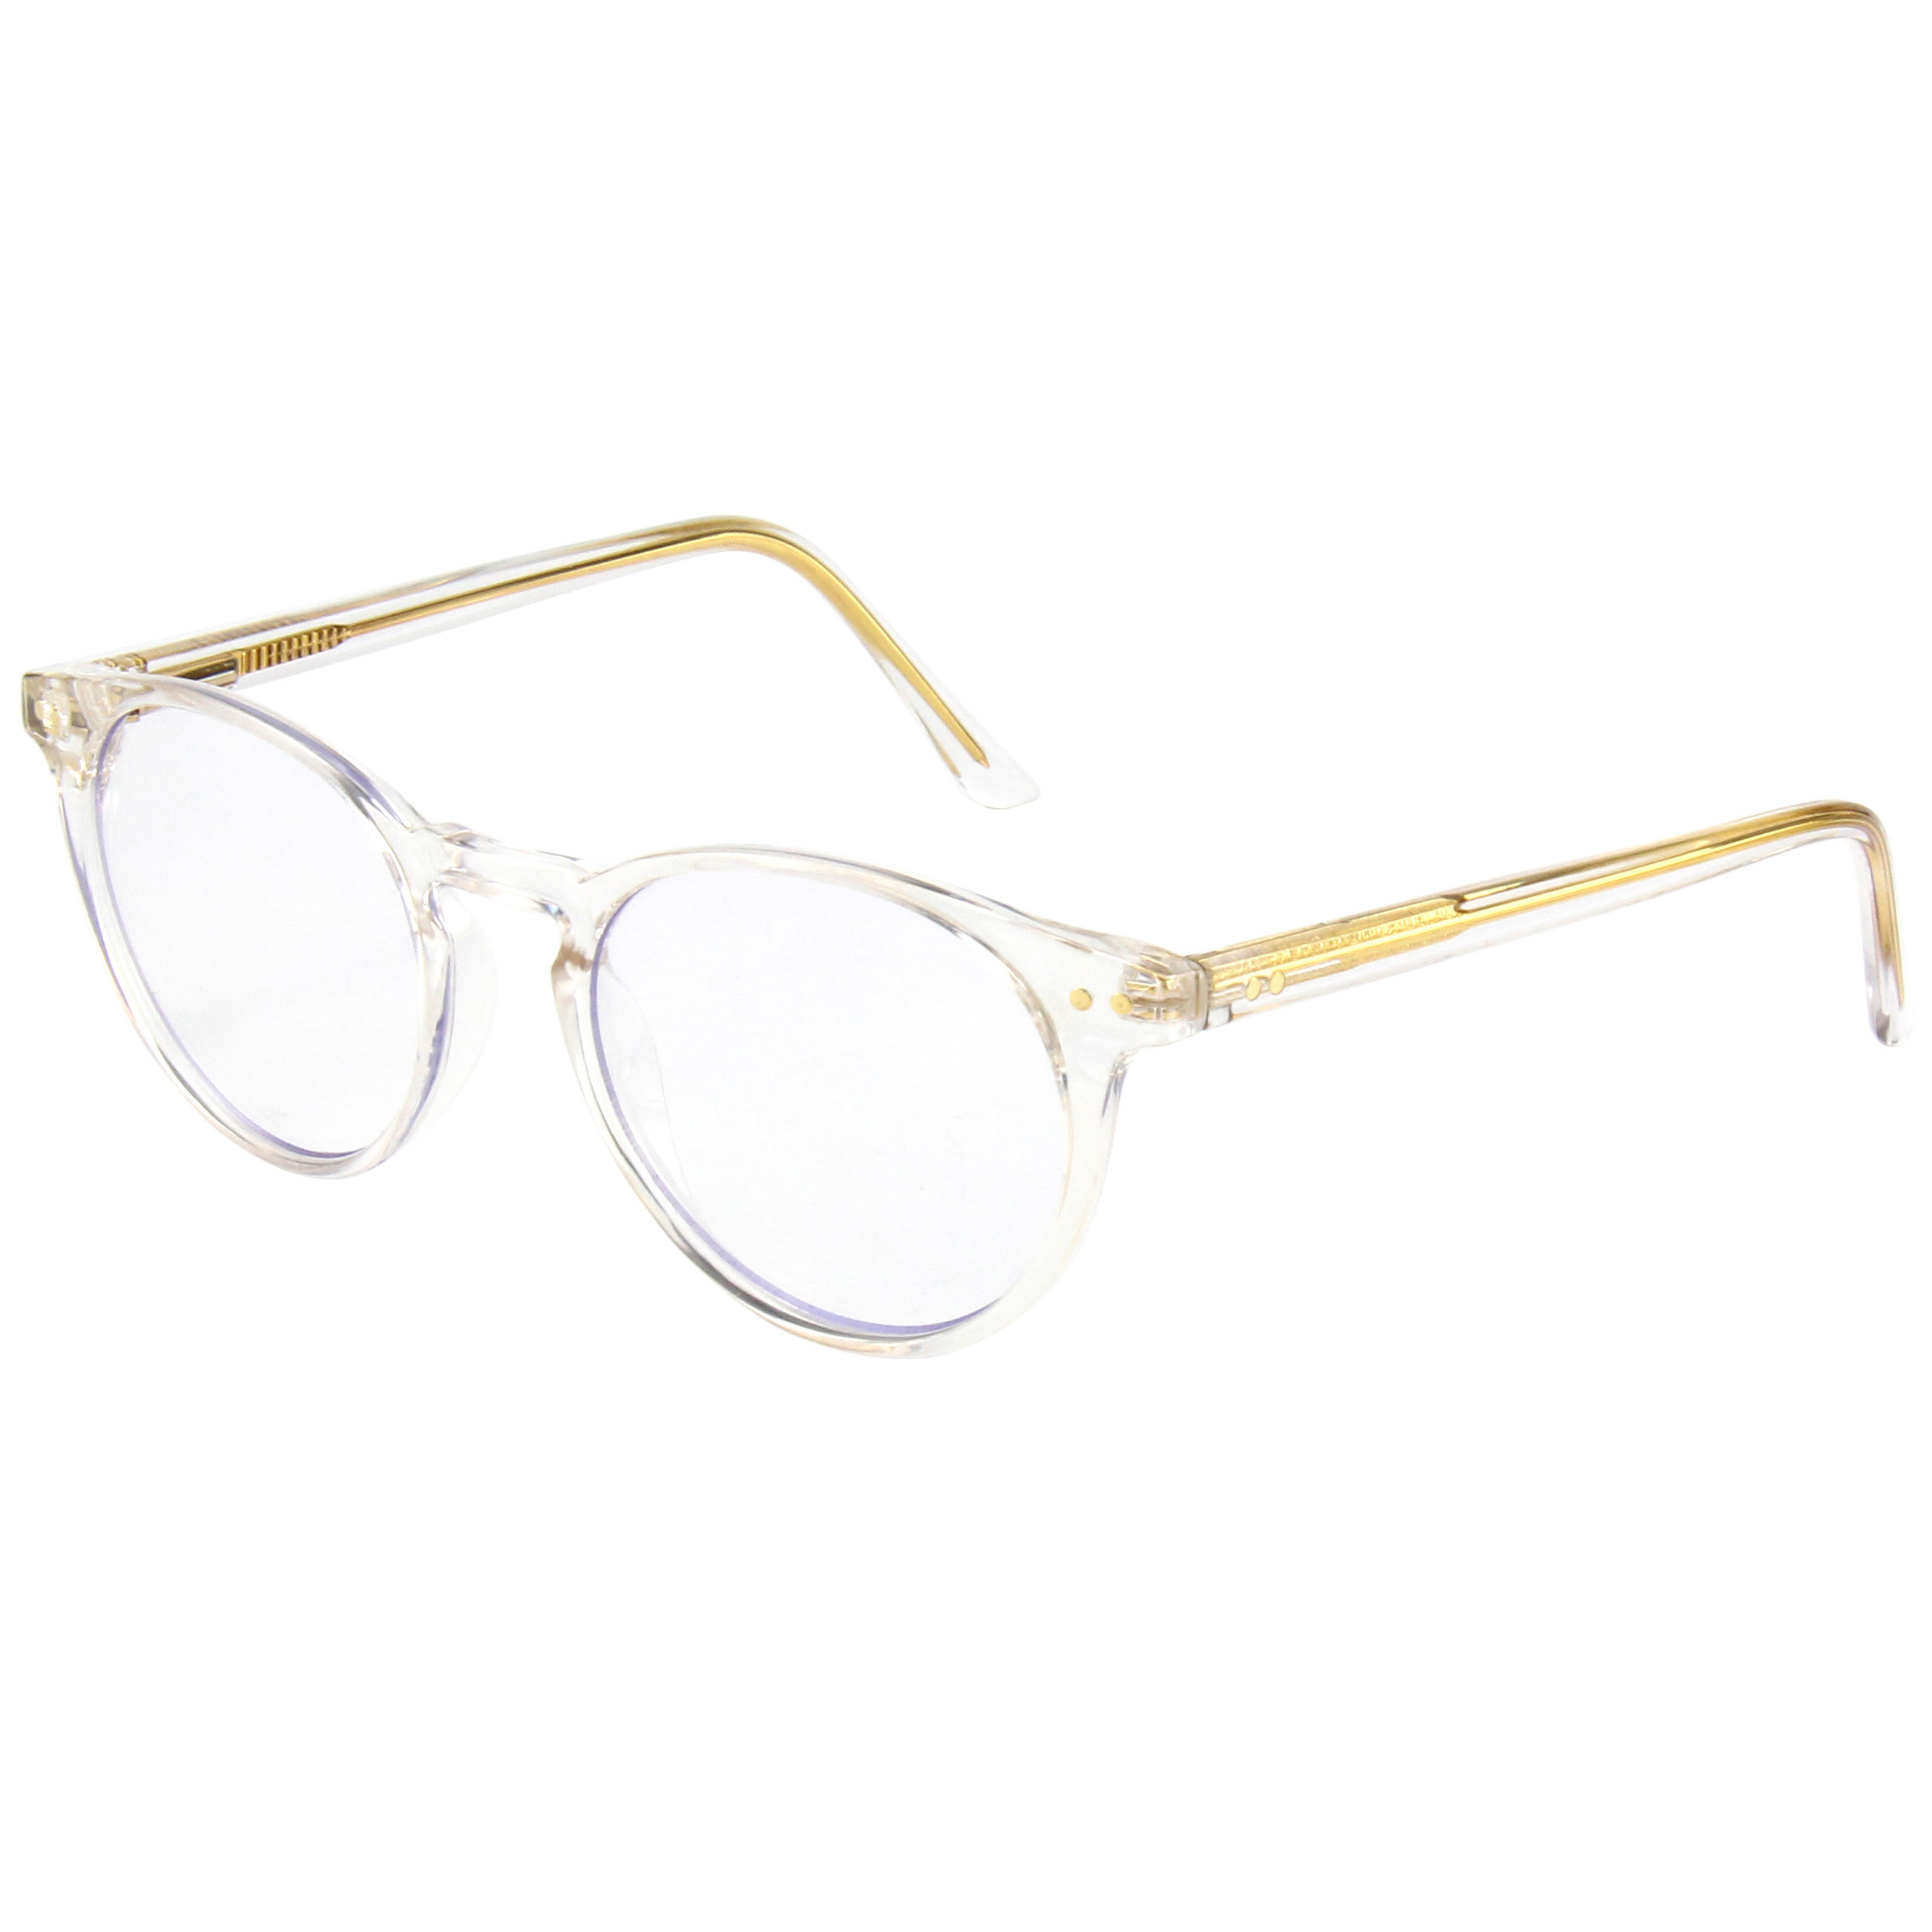 Eugenia optical glasses wholesale modern design -2